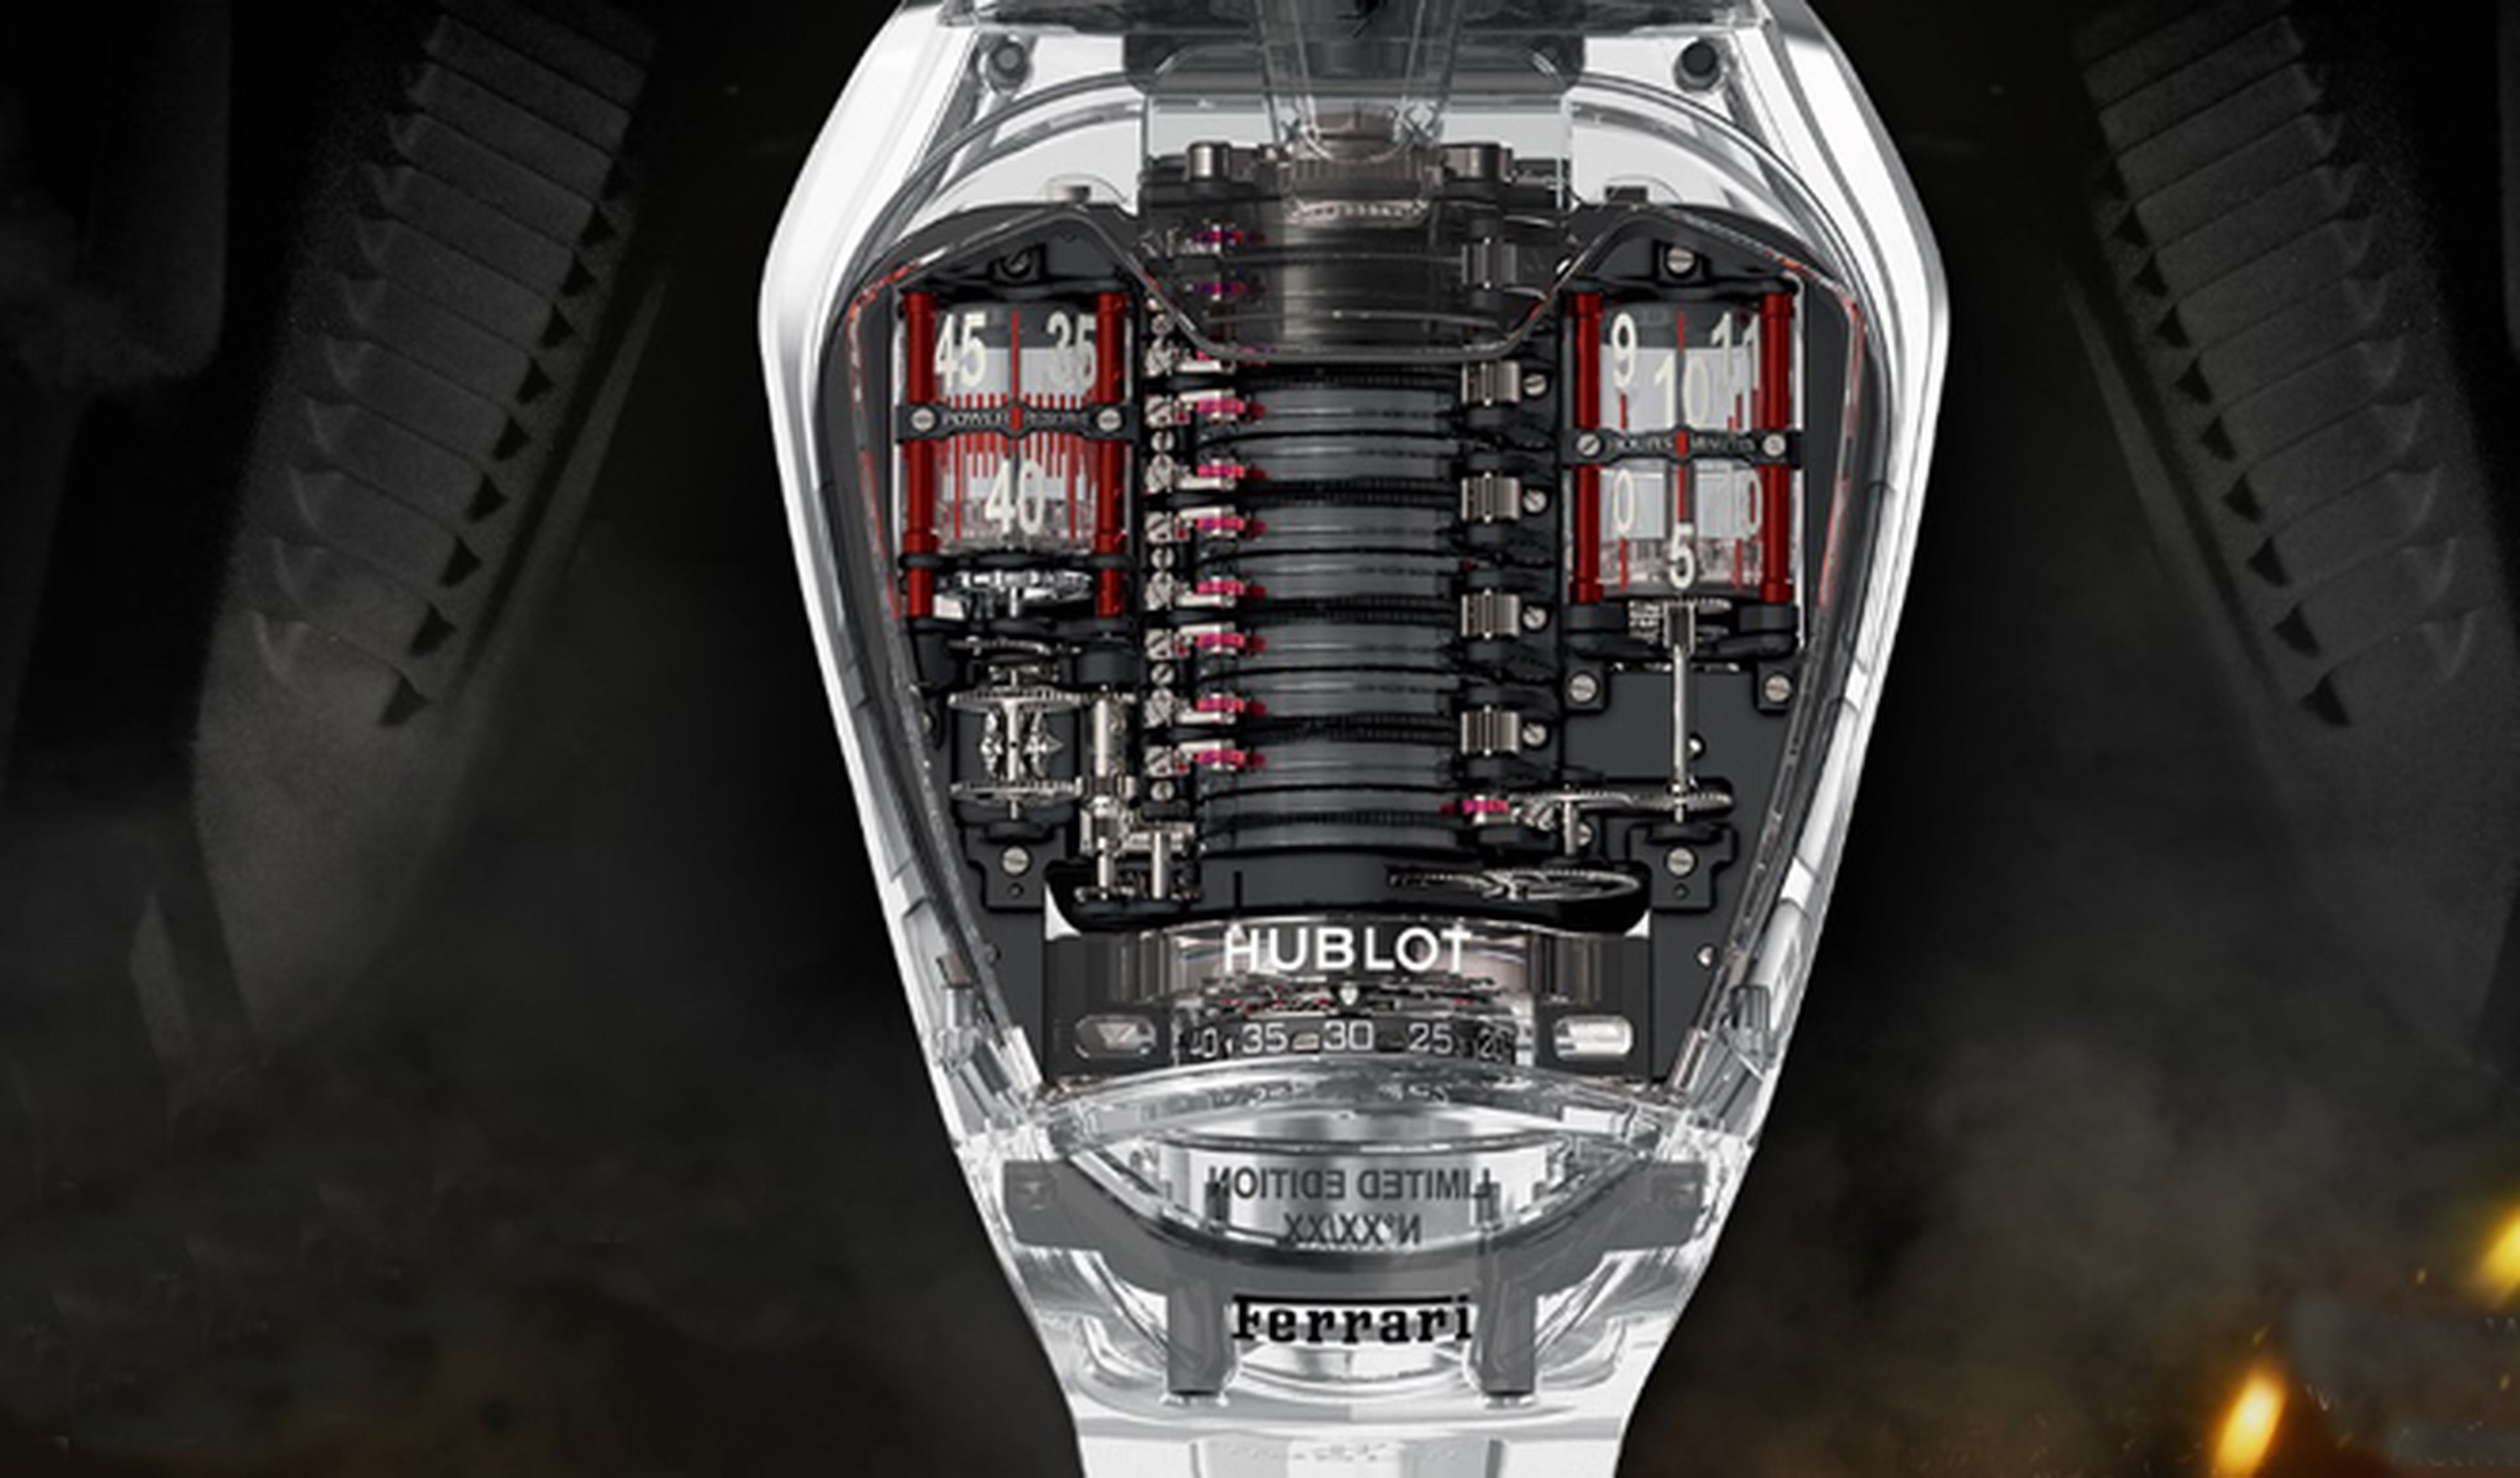 VÍDEO: El reloj que rinde tributo al Ferrari FXX K